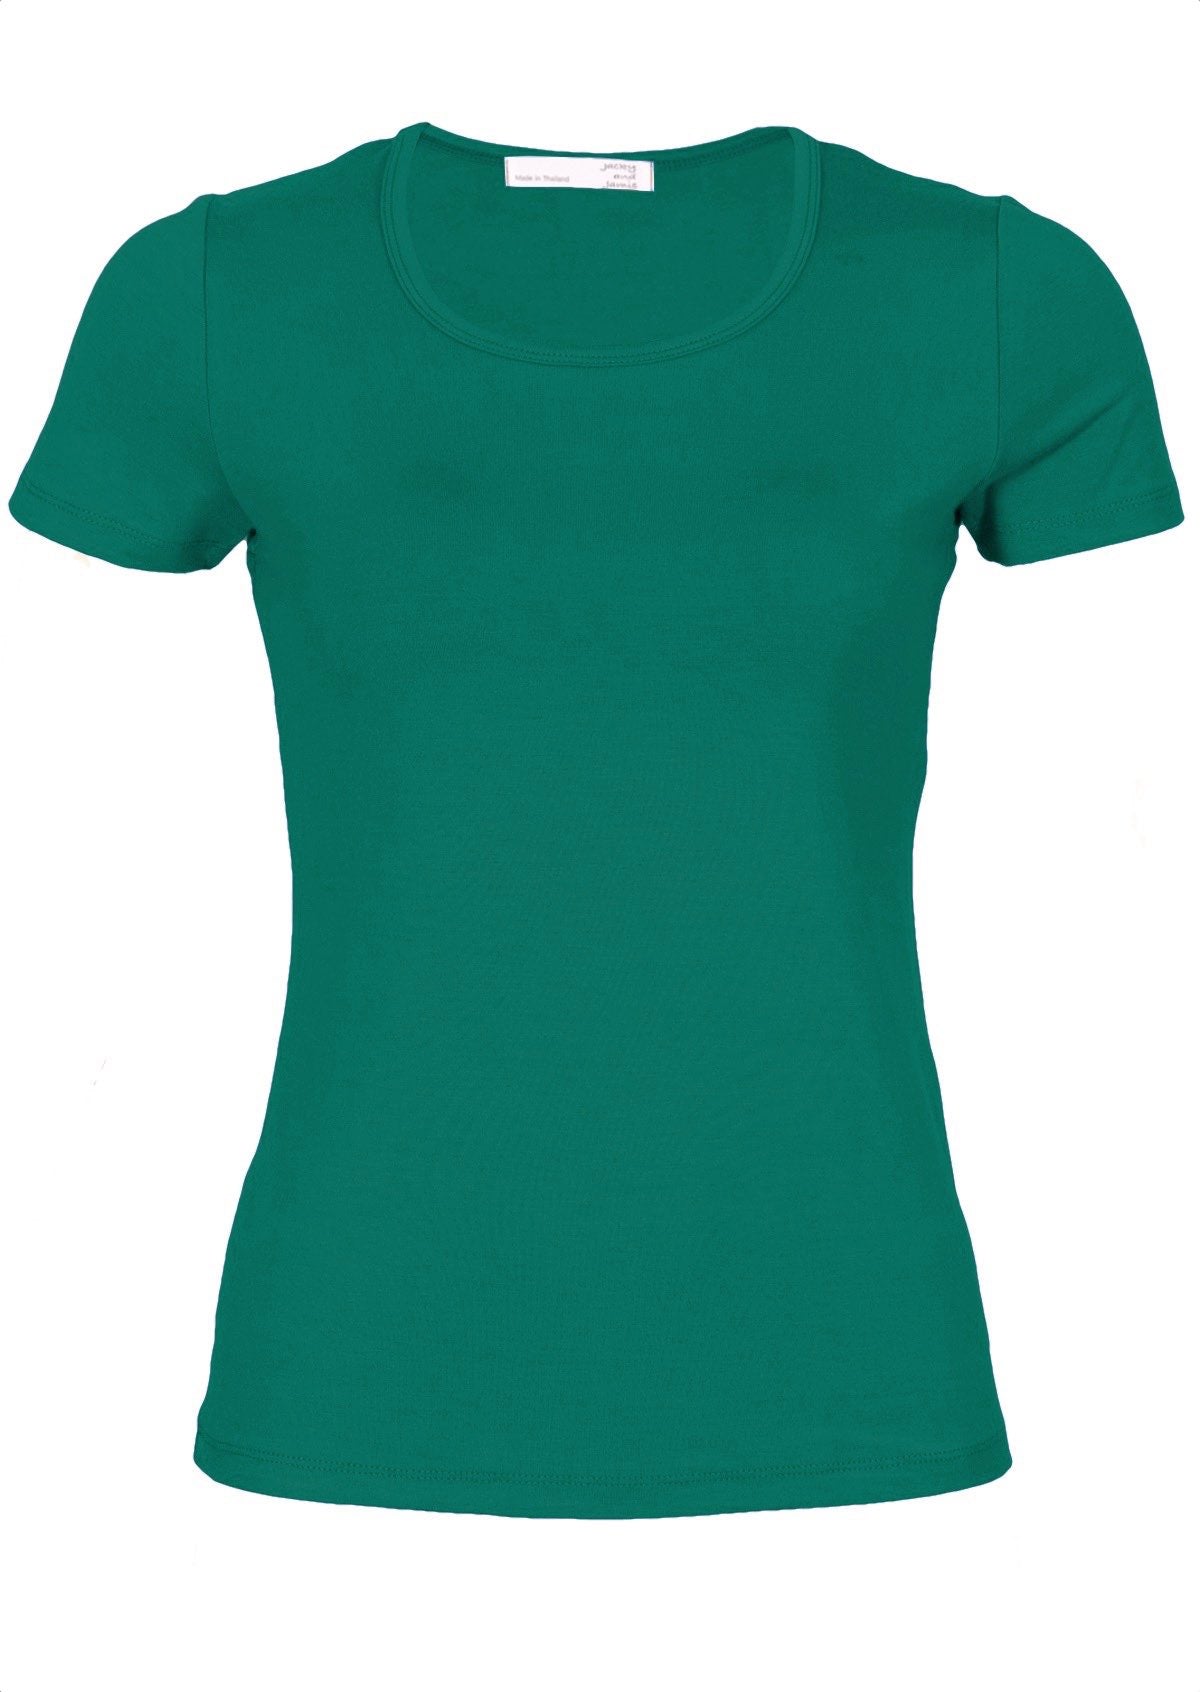 Women's basic green rayon scoop neck t-shirt.